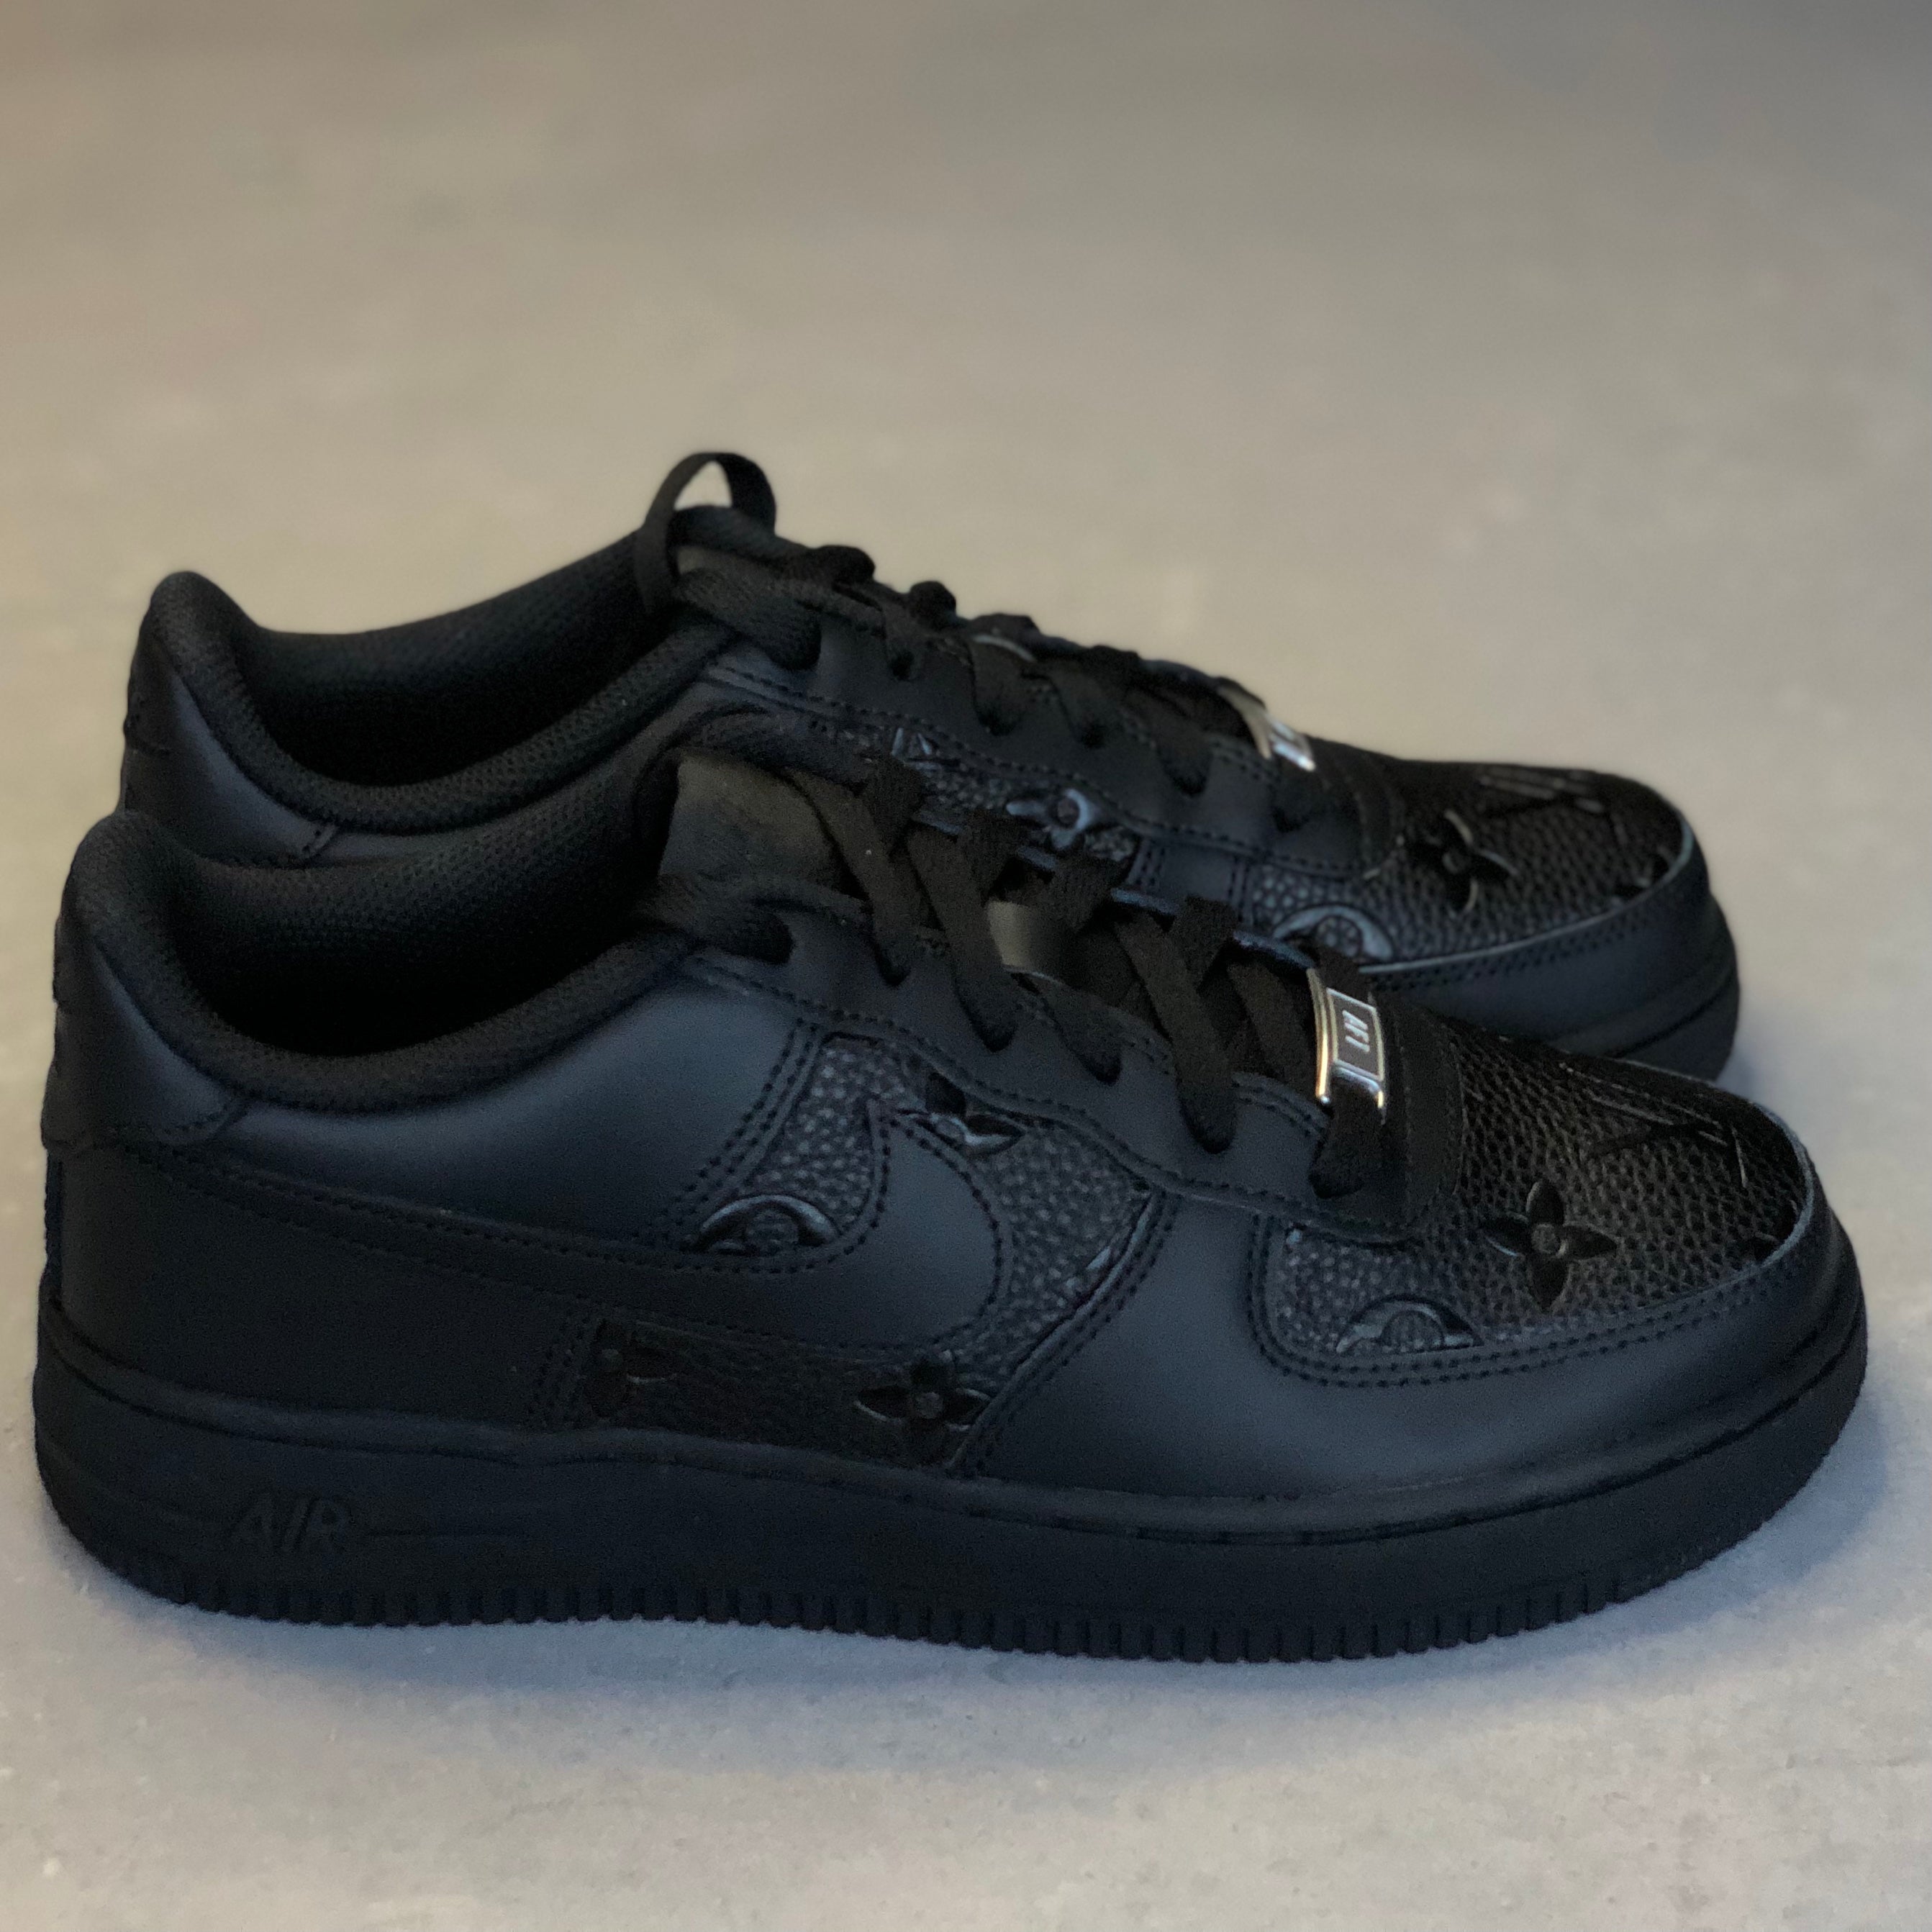 Black Nike air force 1 x Limited grey on black LV - BC.Customz